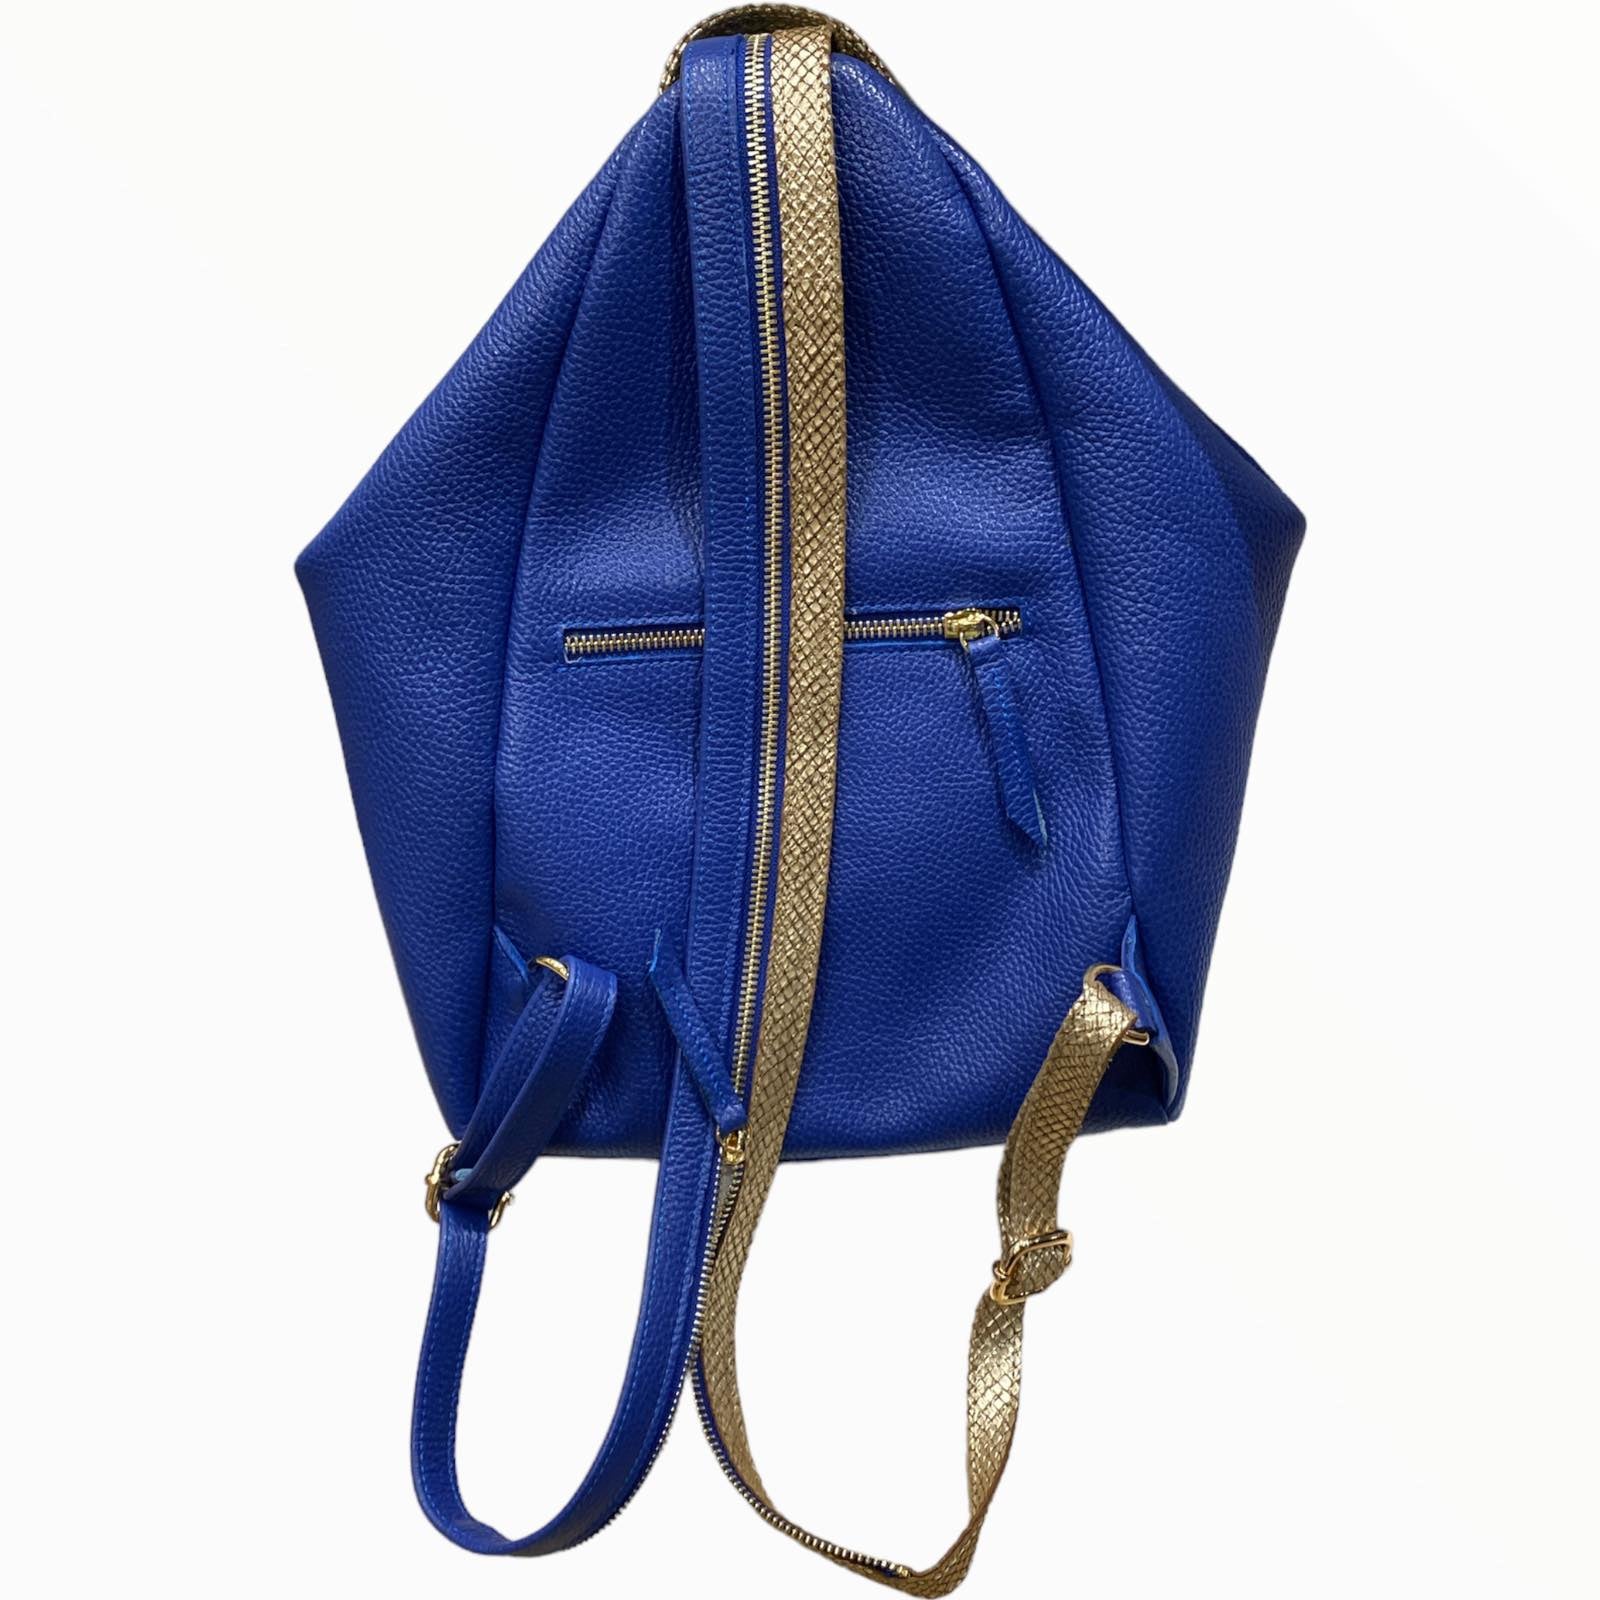 Niovi. Royal blue art leather backpack